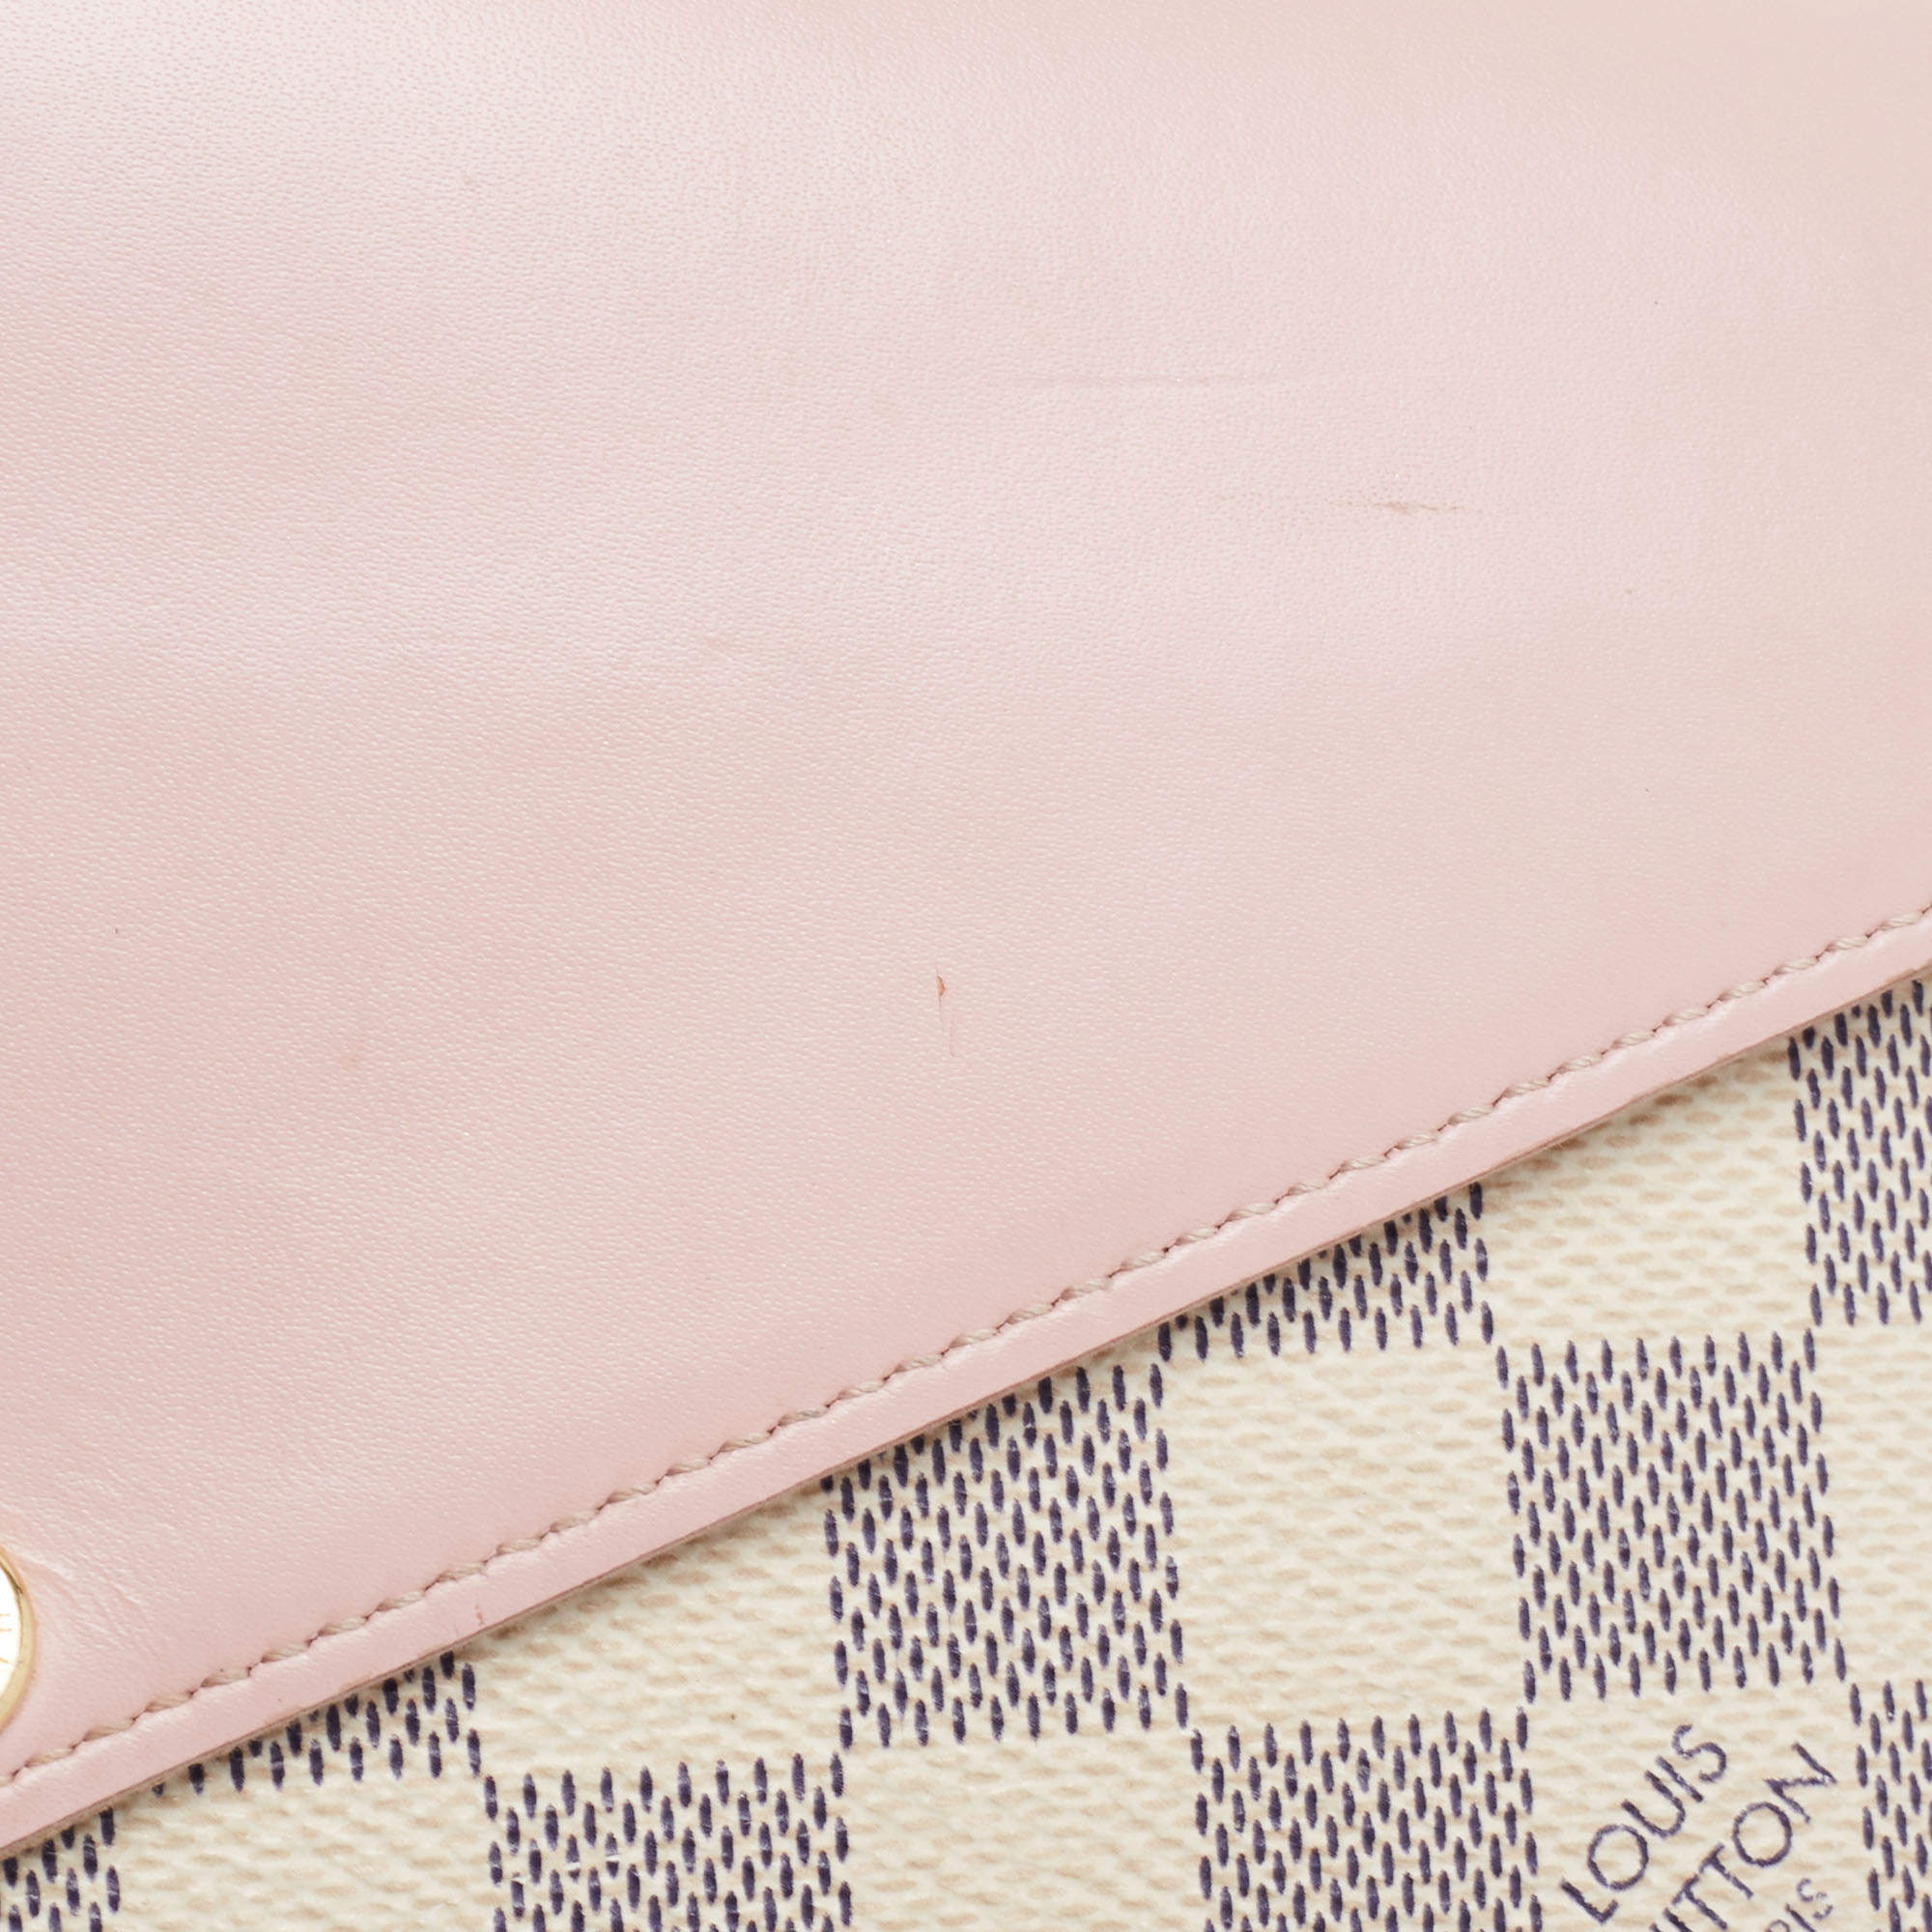 Louis Vuitton Pink Leather And Damier Azur Canvas Felicie Pochette